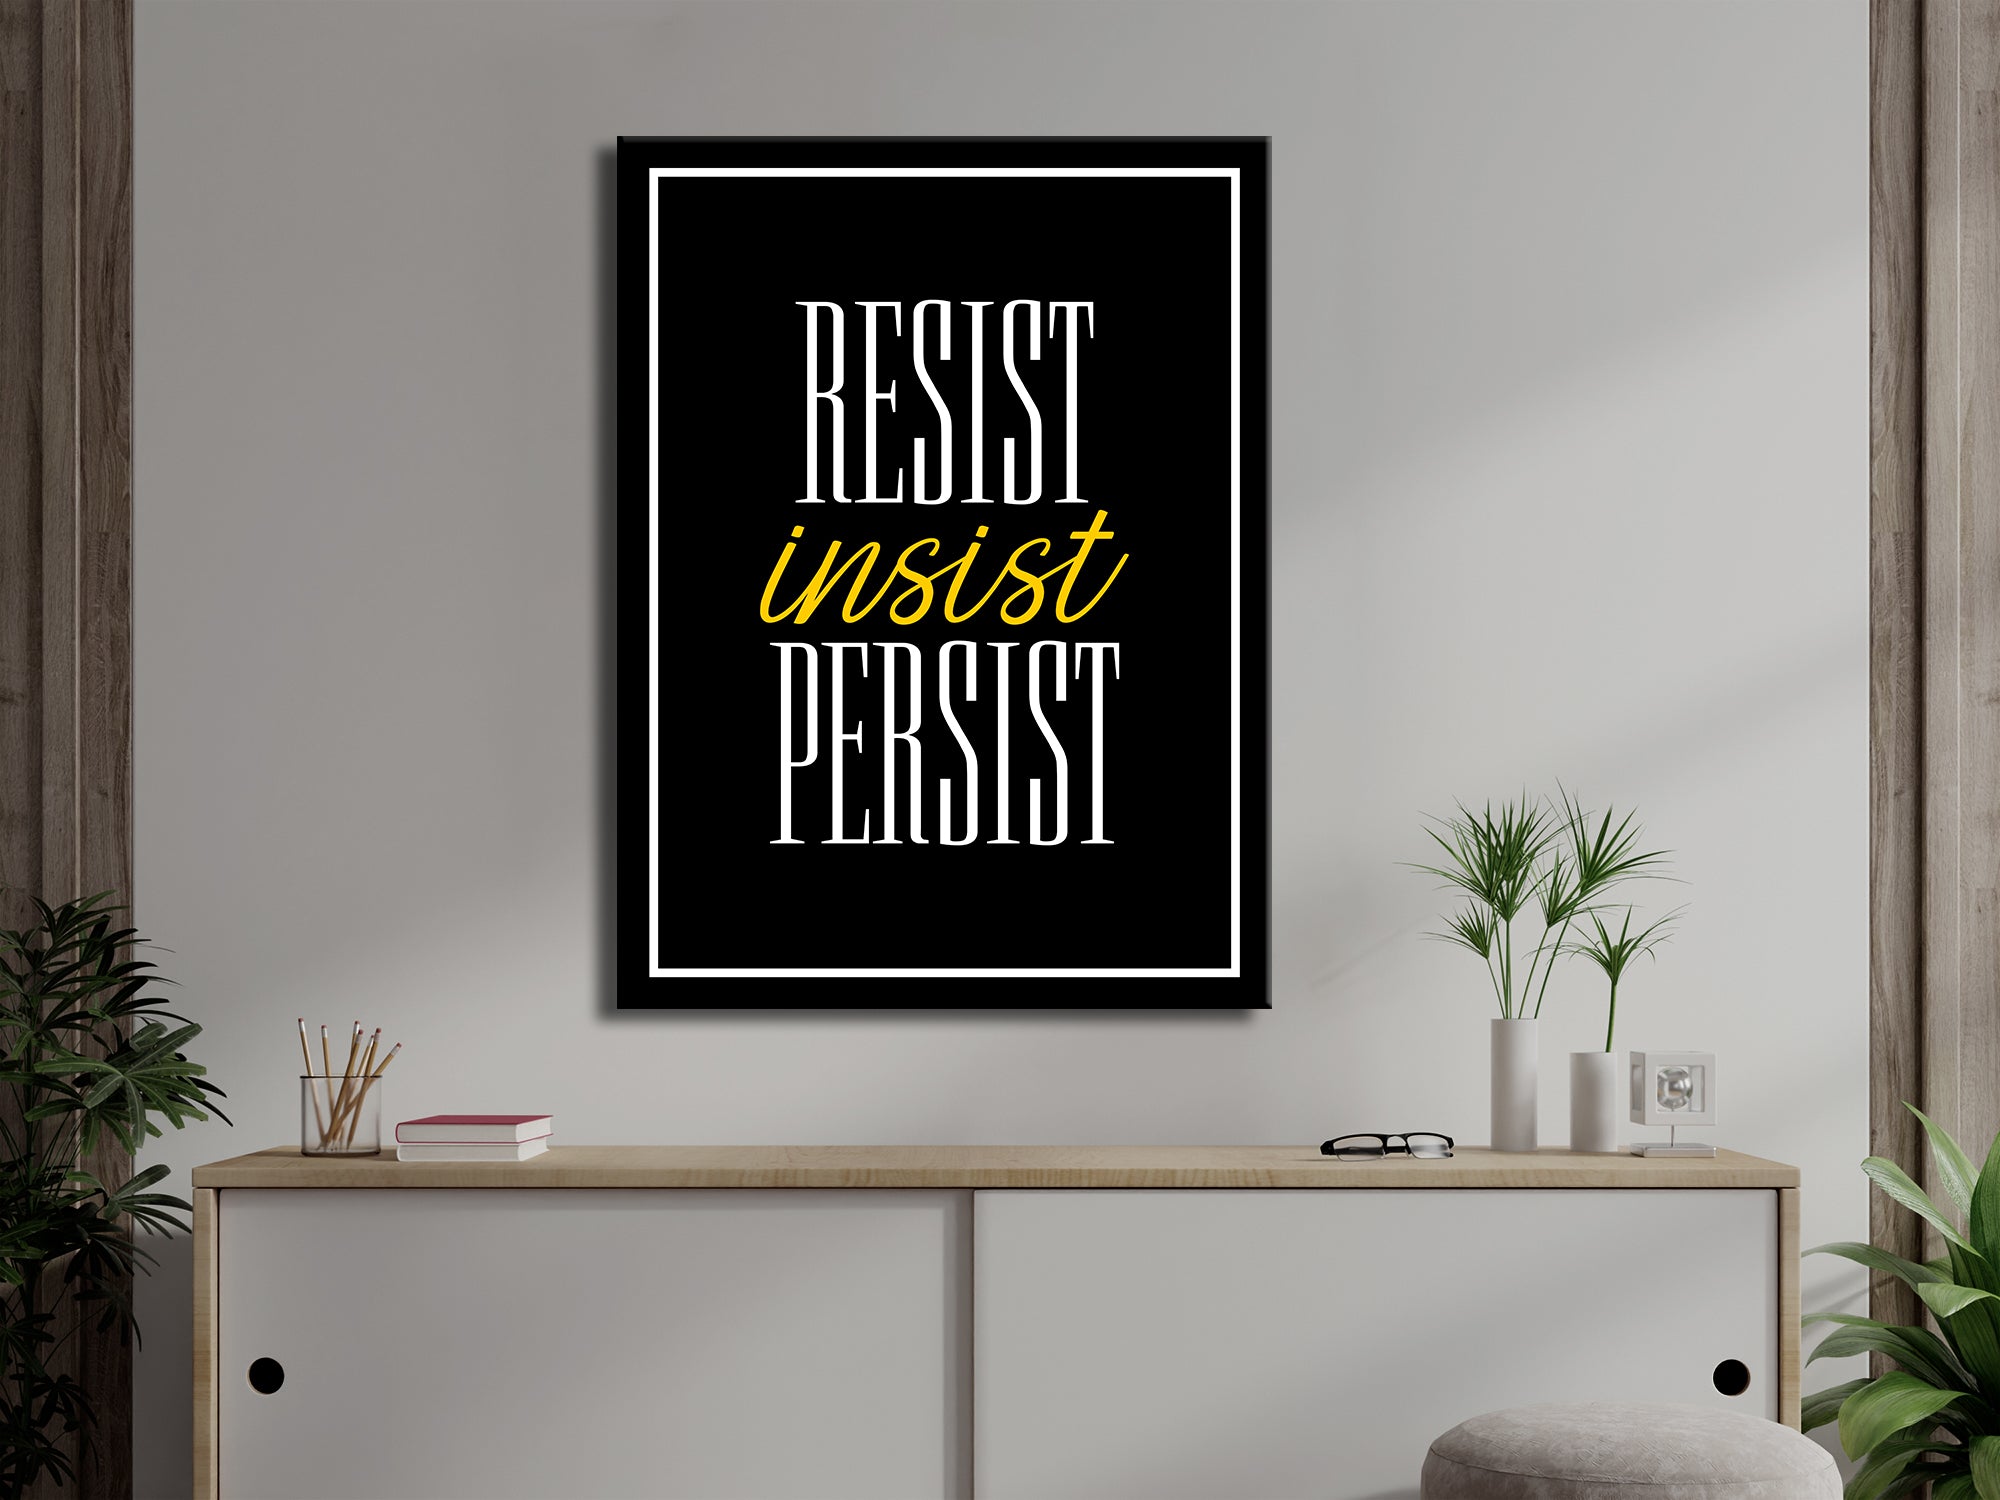 Resist. Insist. Persist